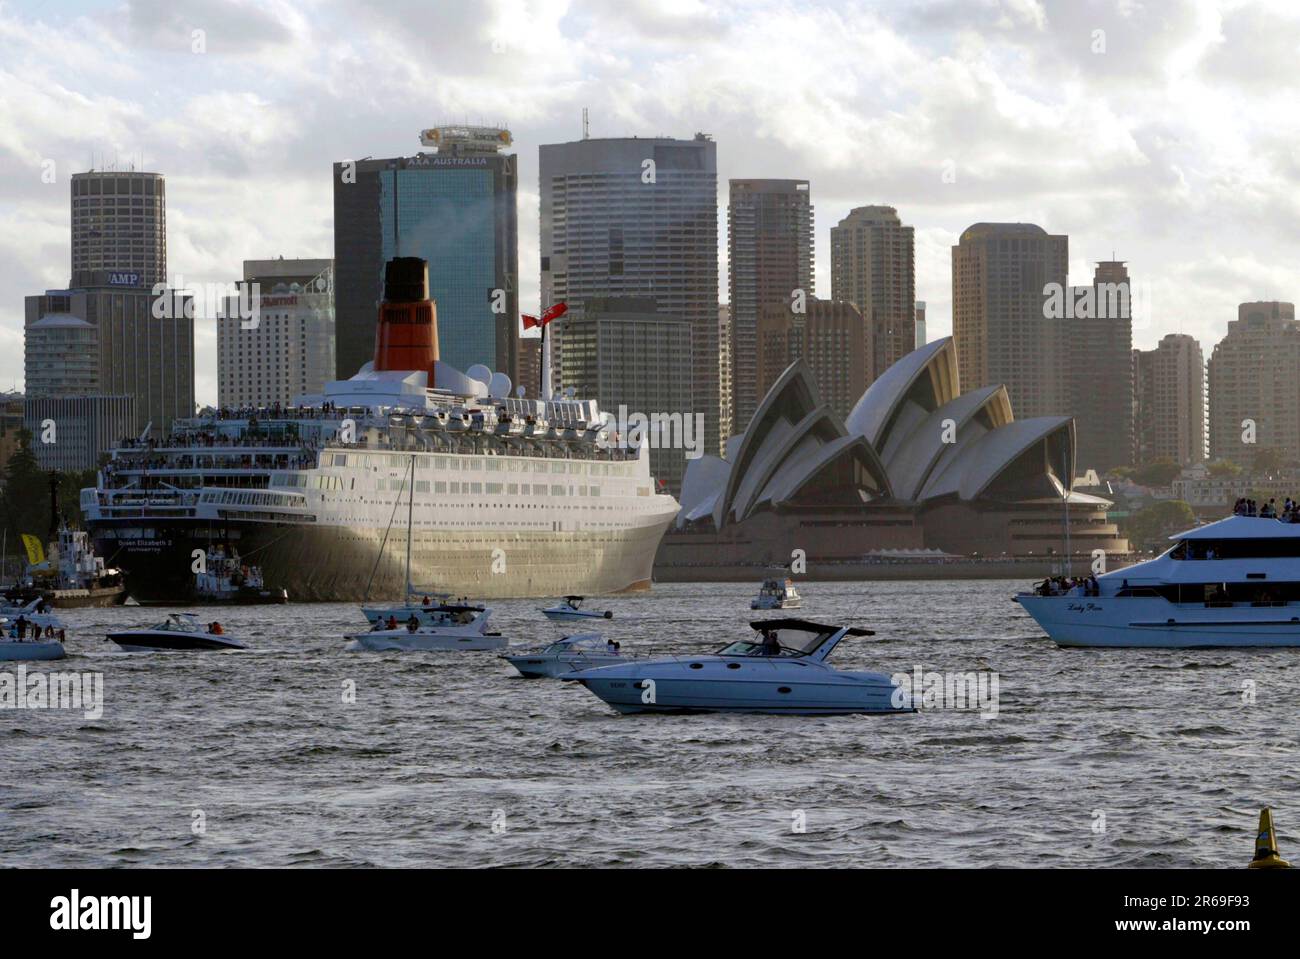 Visit Sydney in Australia with Cunard